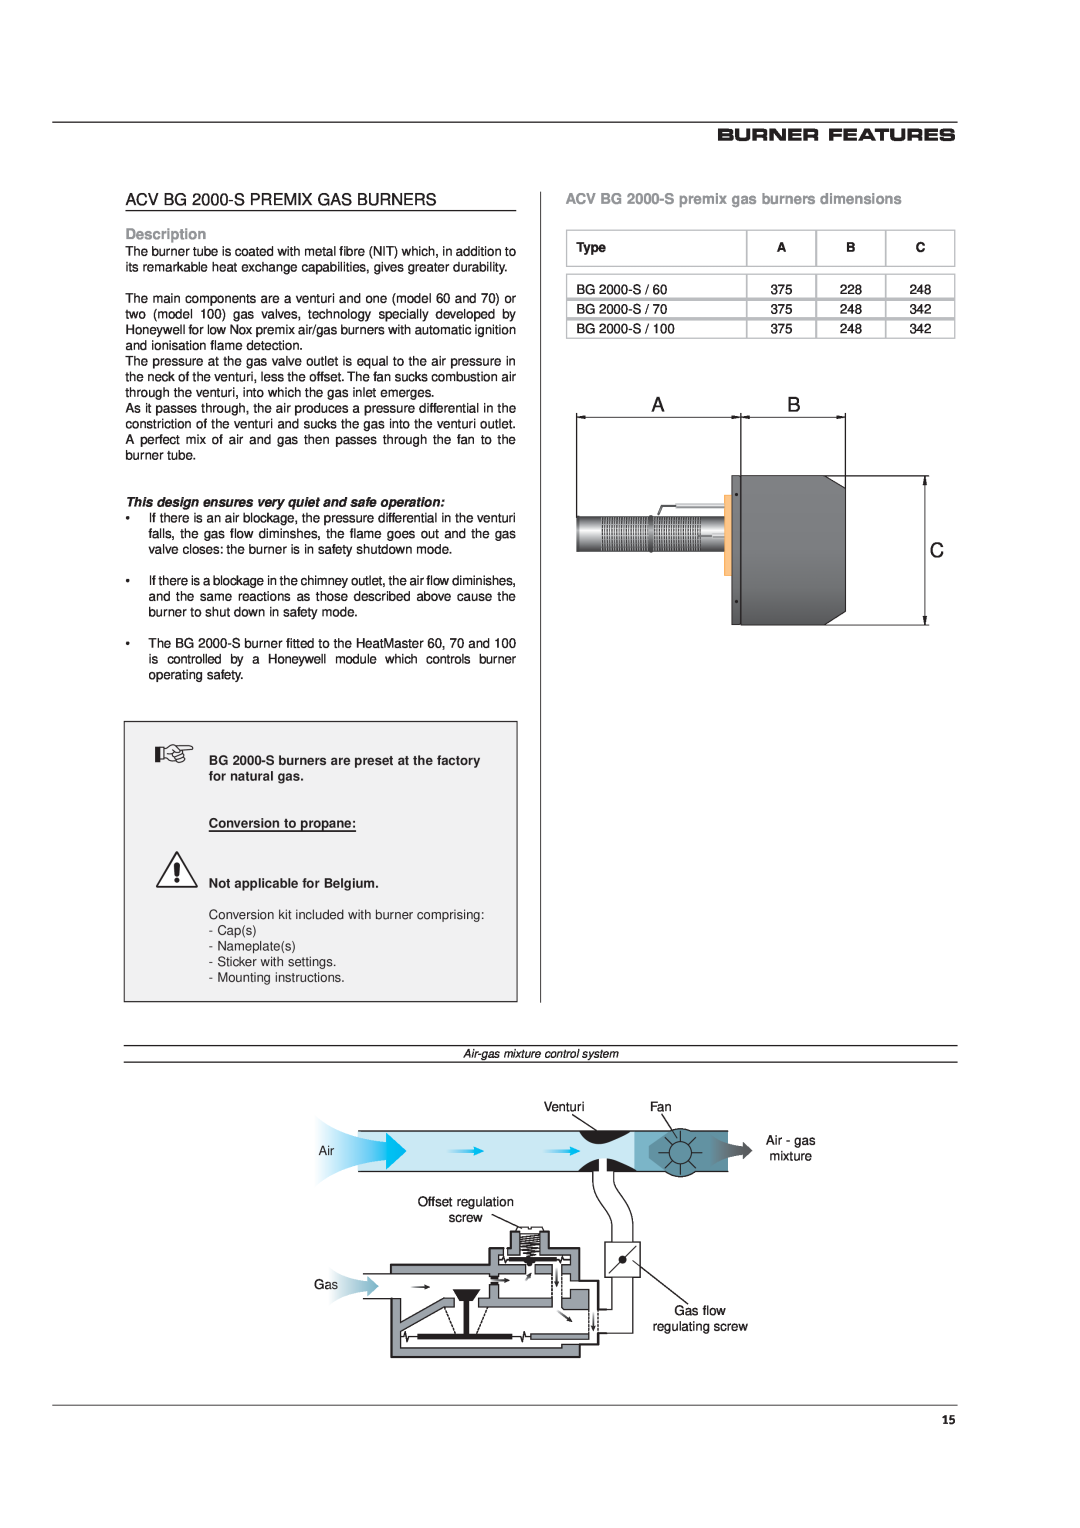 Heatmaster HM 60 N, 150 JUMBO, 100 N, 70 N Burner Features, Ab C, Description, ACV BG 2000-Spremix gas burners dimensions 